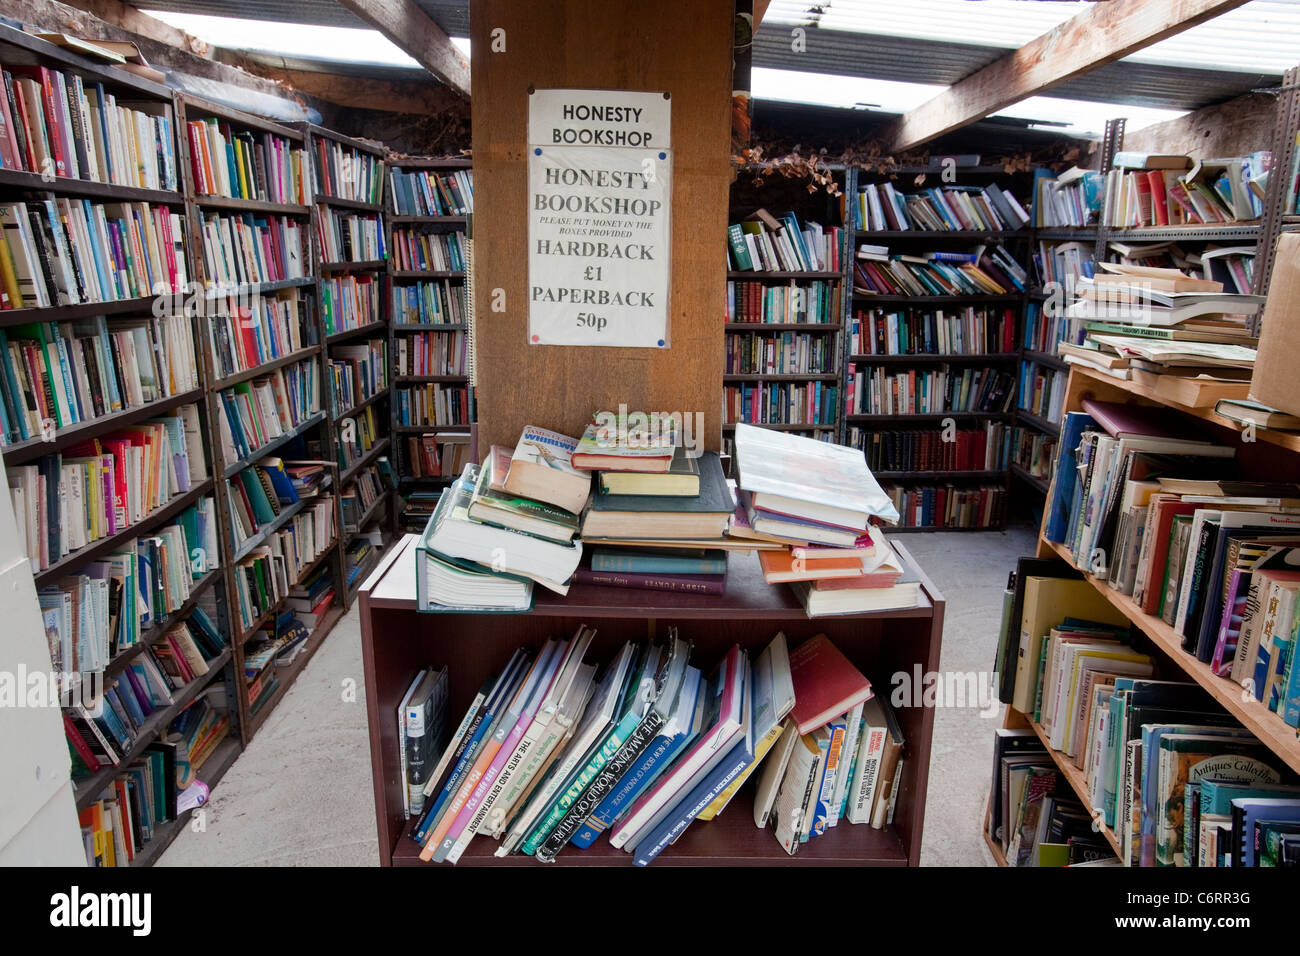 An honesty bookshop in Hay-On-Wye, UK Stock Photo